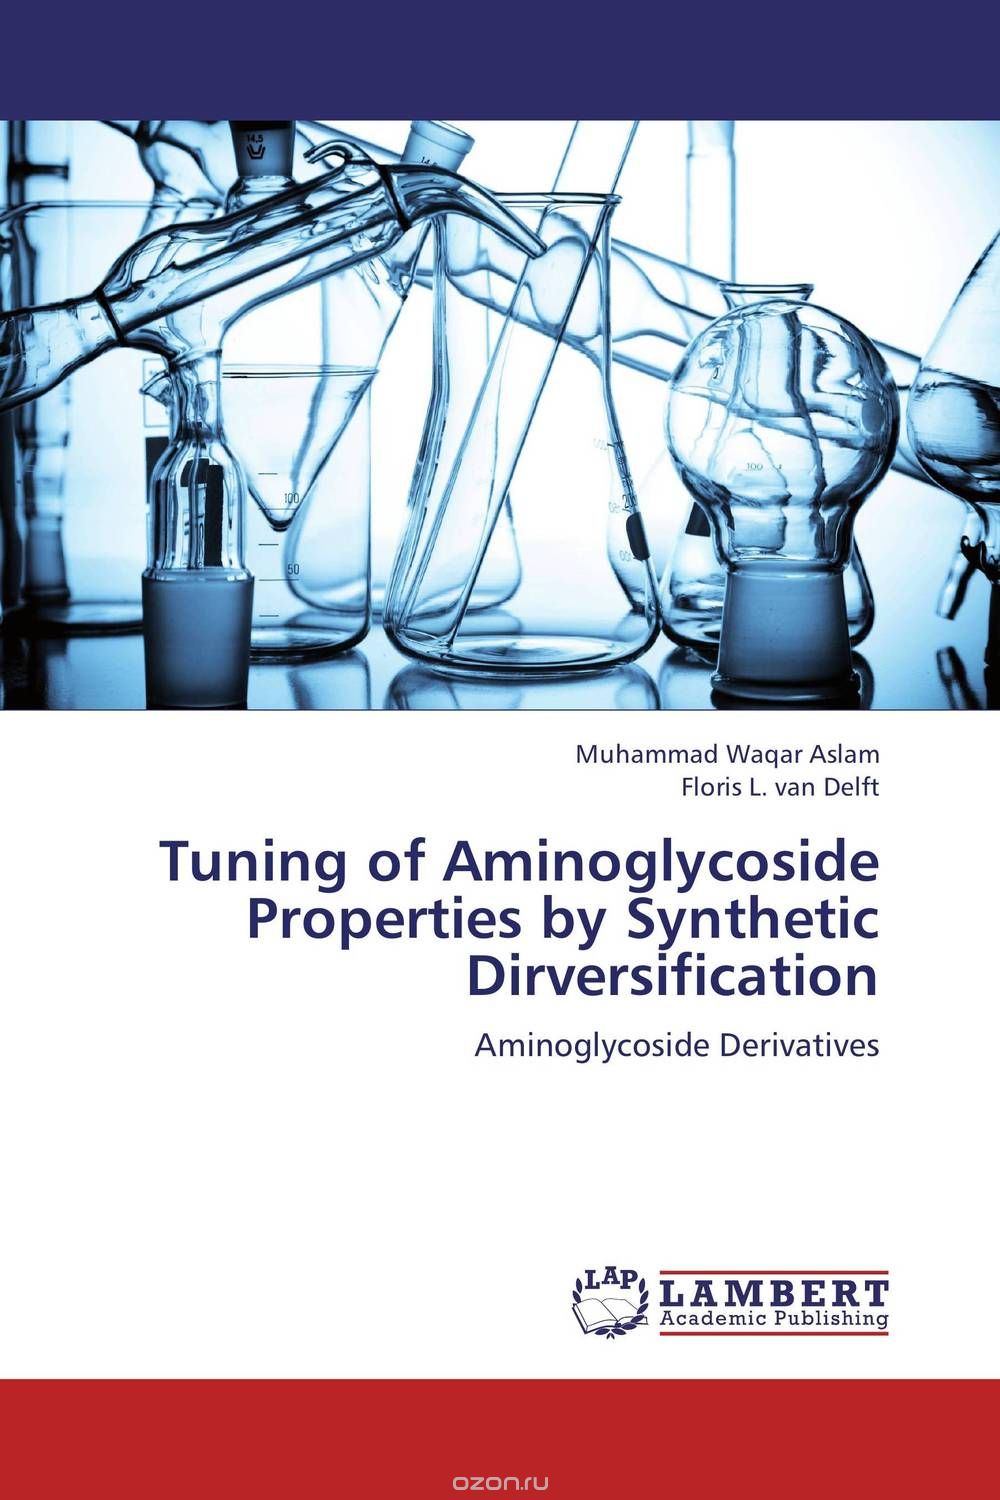 Скачать книгу "Tuning of Aminoglycoside Properties by Synthetic Dirversification"